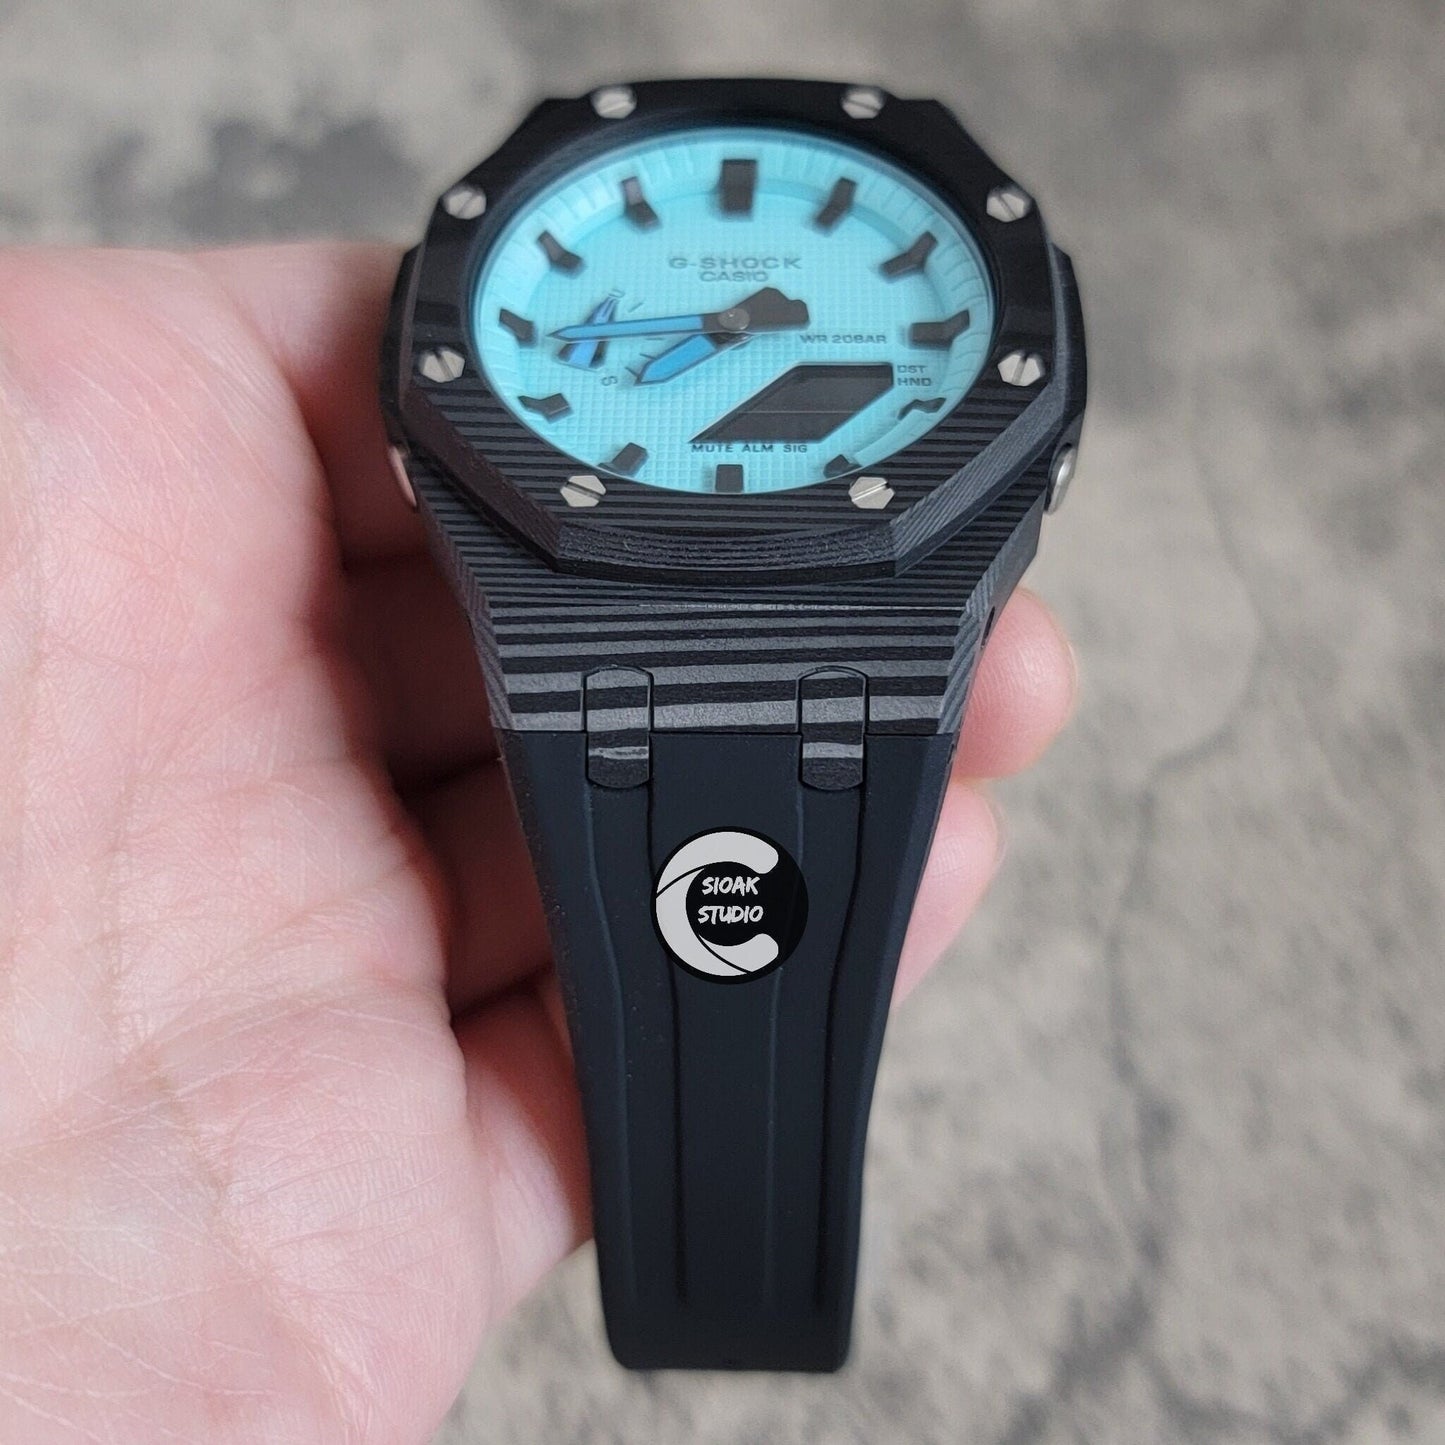 Casioak Mod Watch Carbon Fiber Black Case Black Strap Tiffany Black Time Mark Tiffany Dial 44mm - Casioak Studio